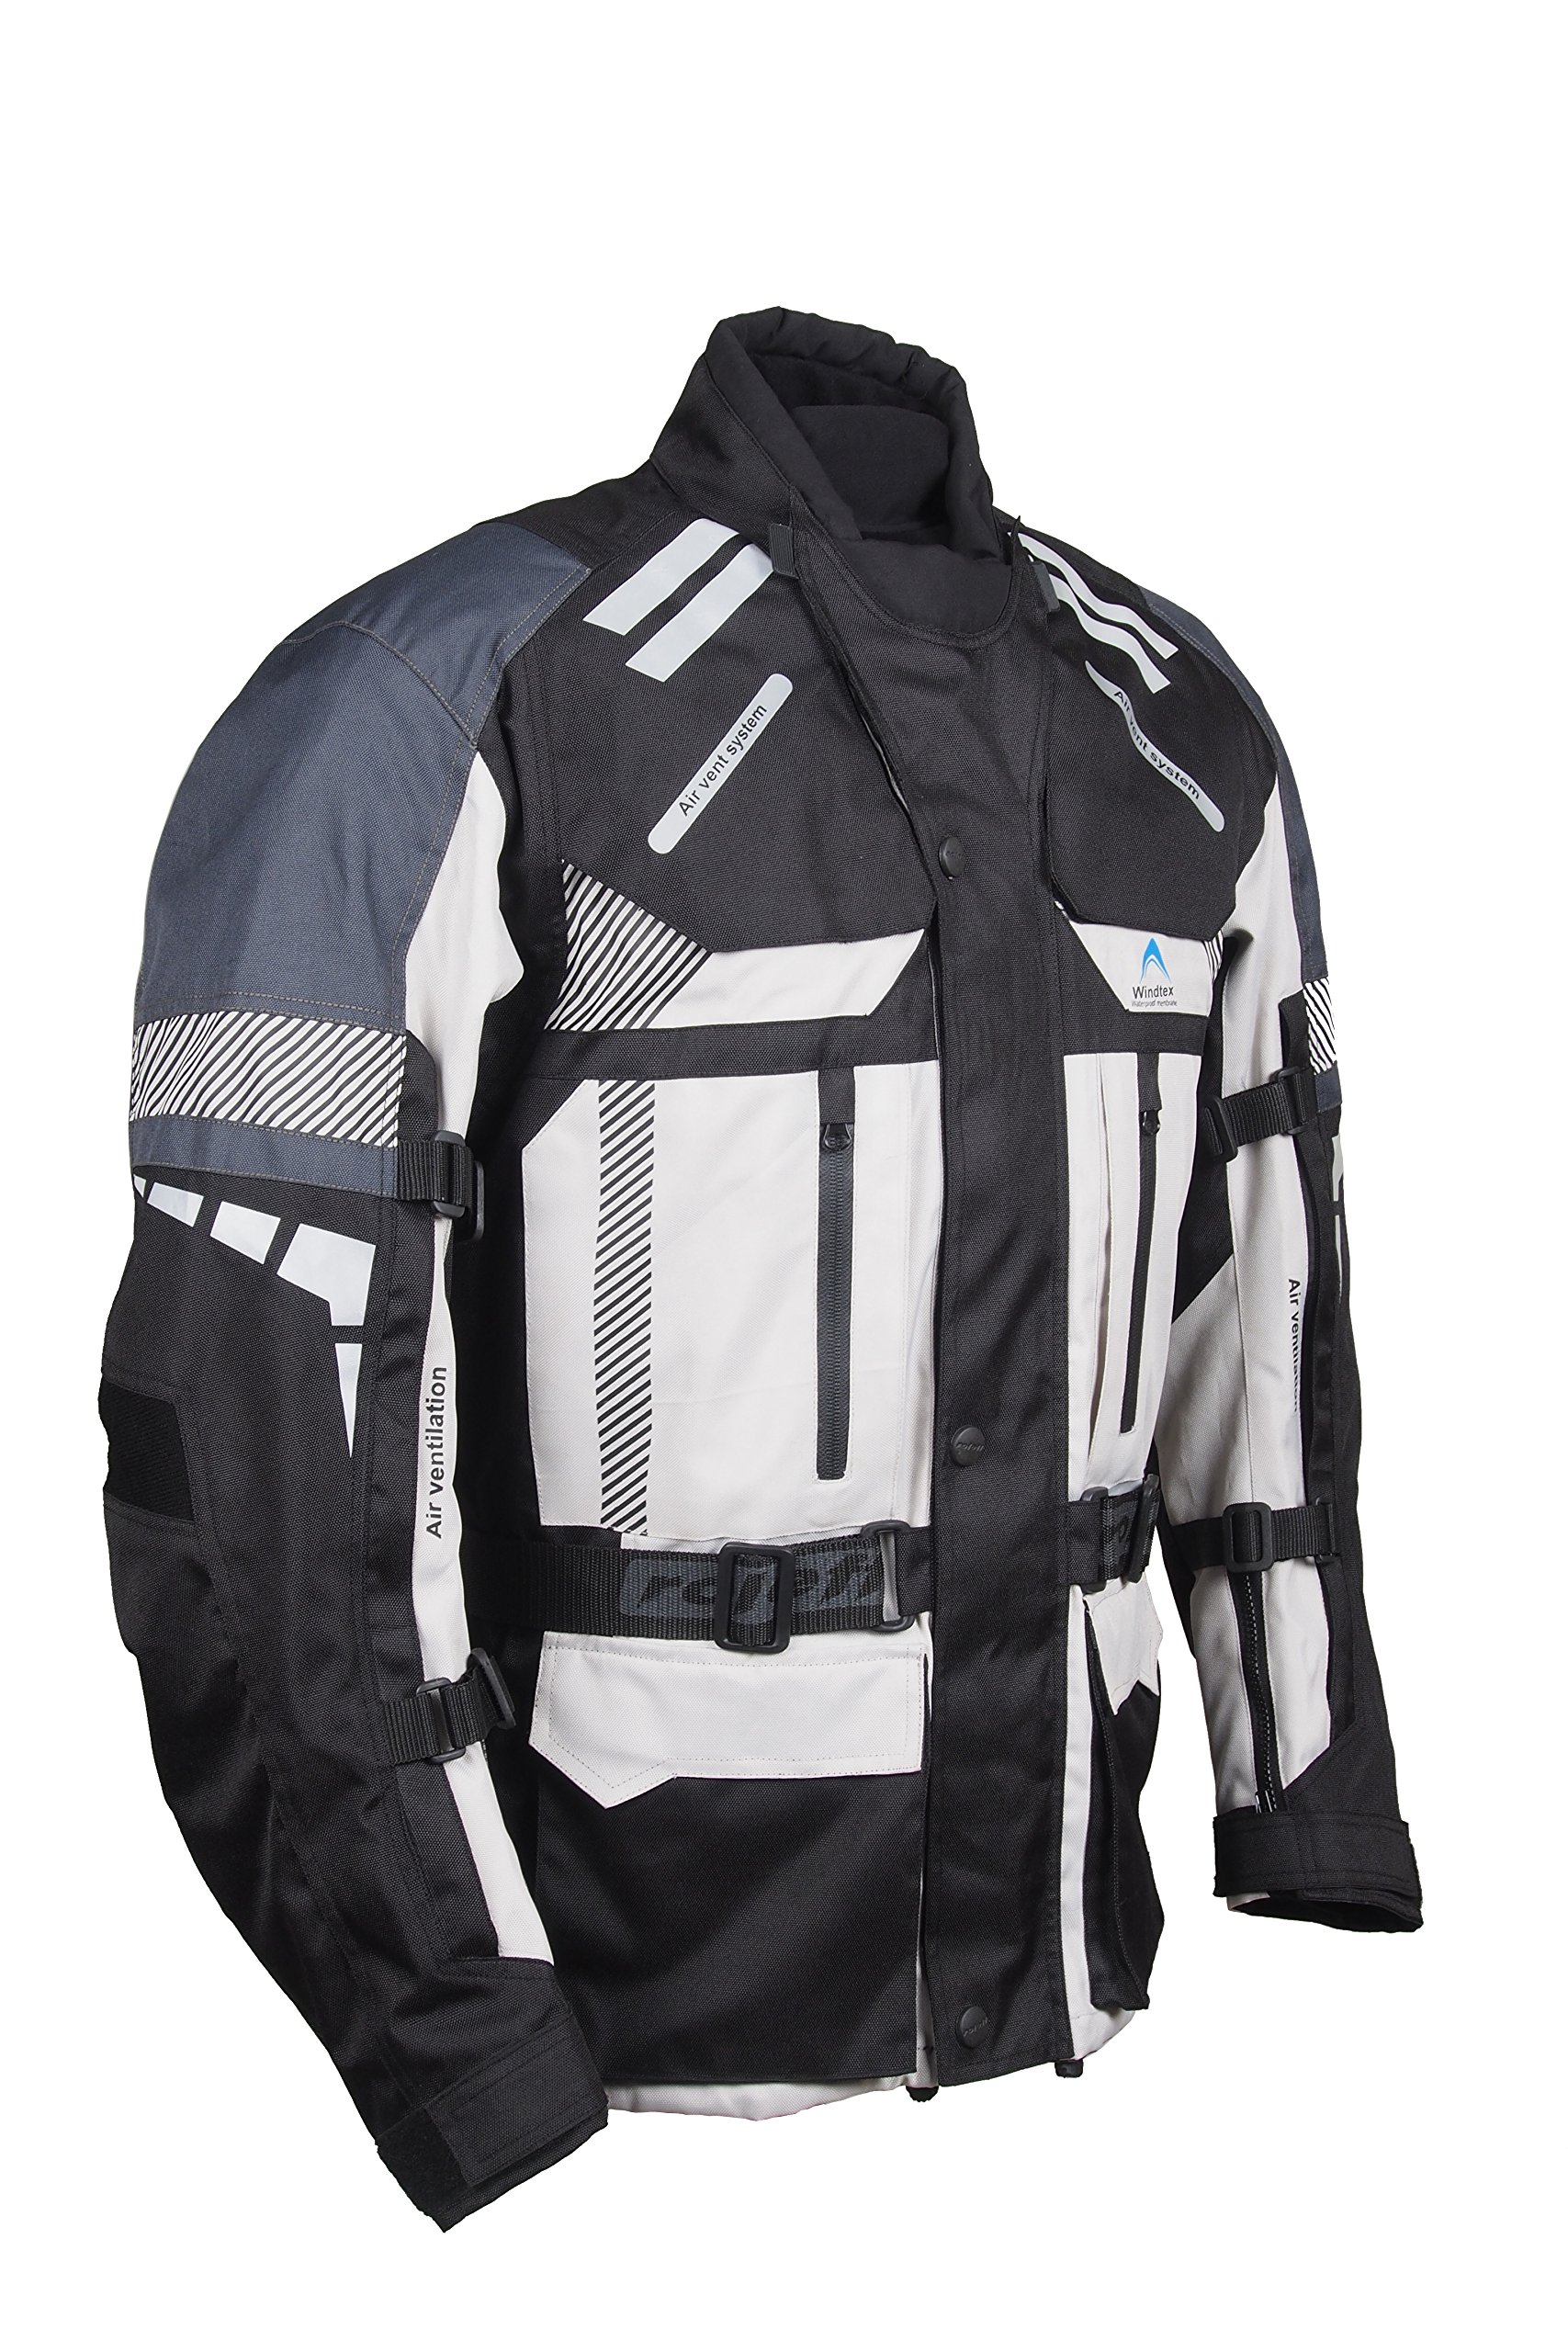 Roleff Racewear Unisex 7753 Textiljacke Motorradjacke mit Protektoren, grau/schwarz, M EU